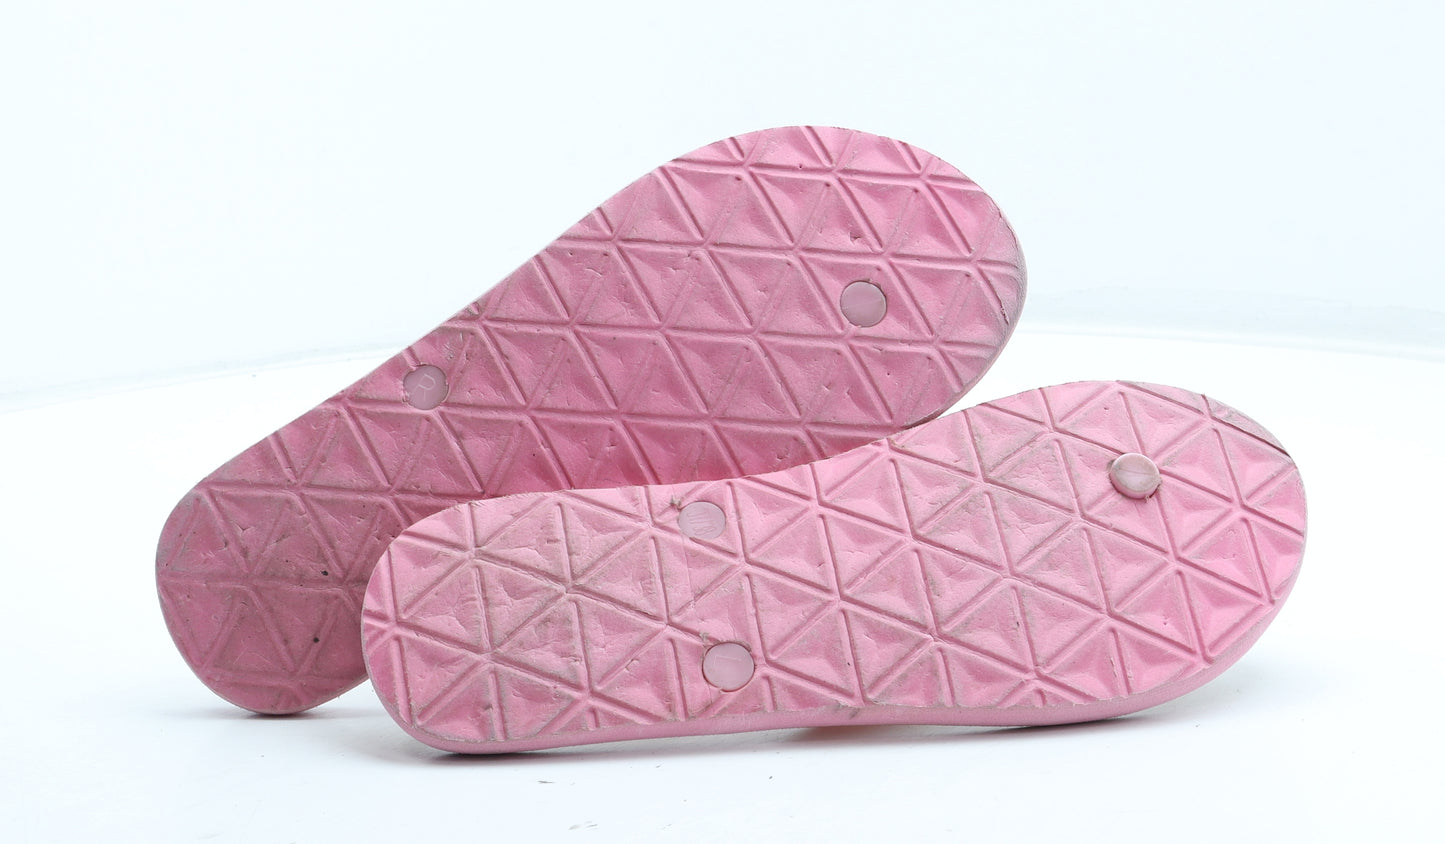 Surf State Womens Pink Rubber Thong Sandal UK - Size UK 4-5